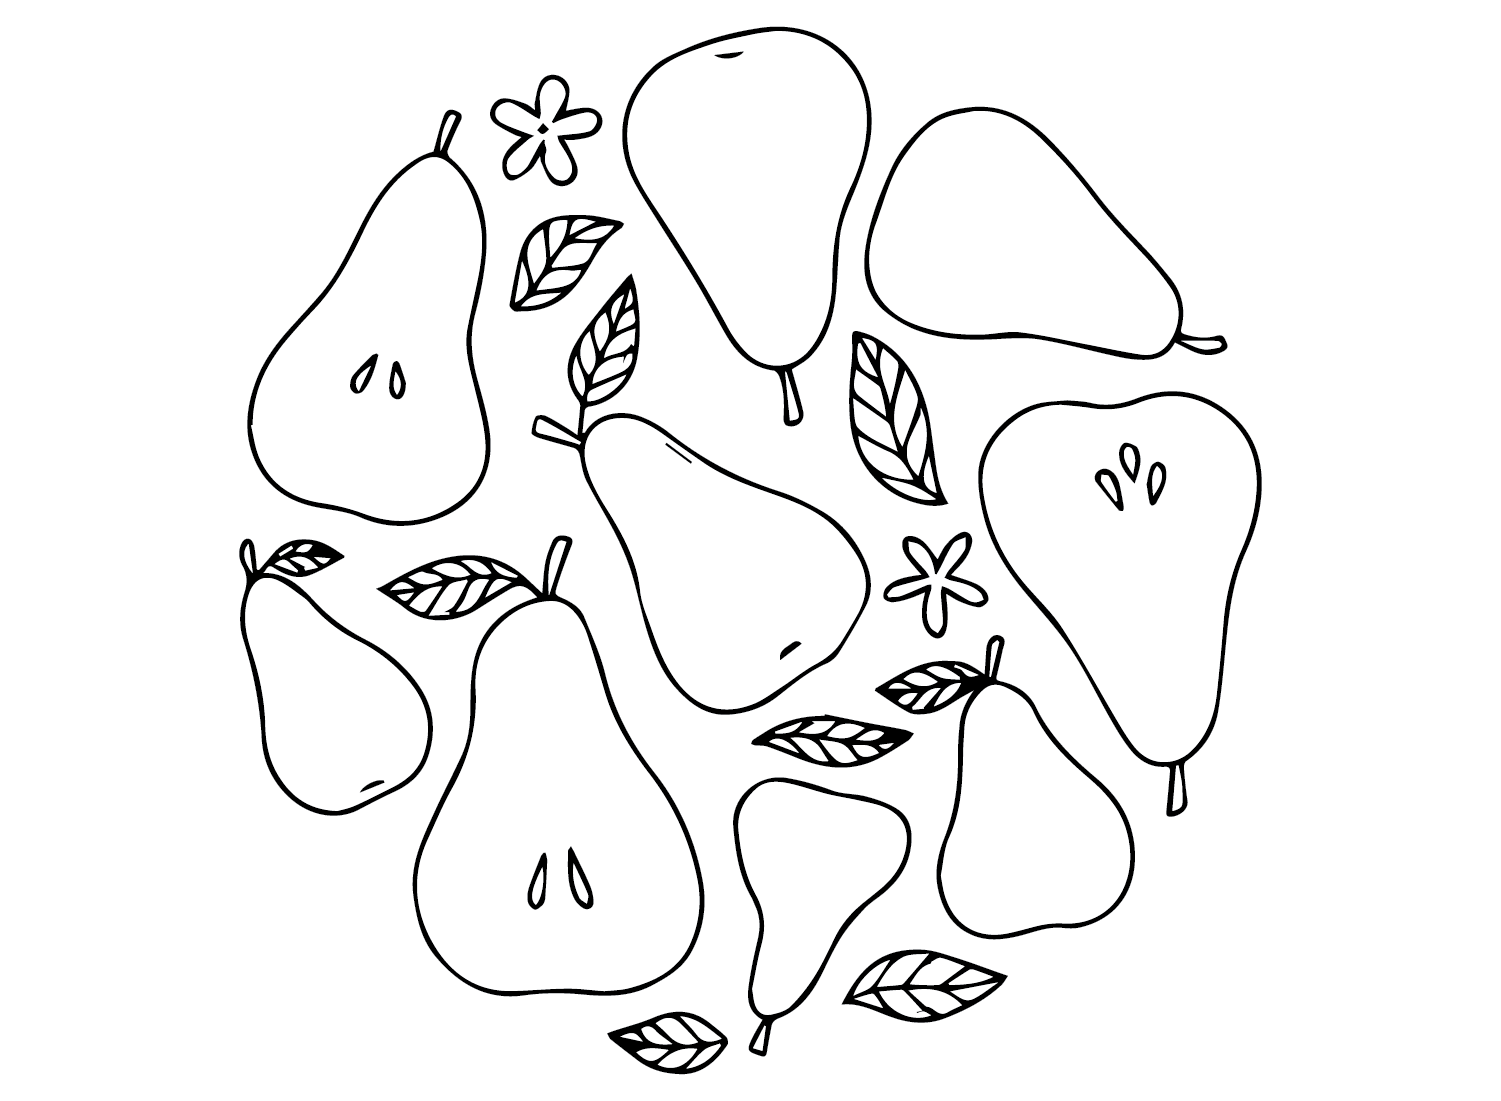 梨子图案